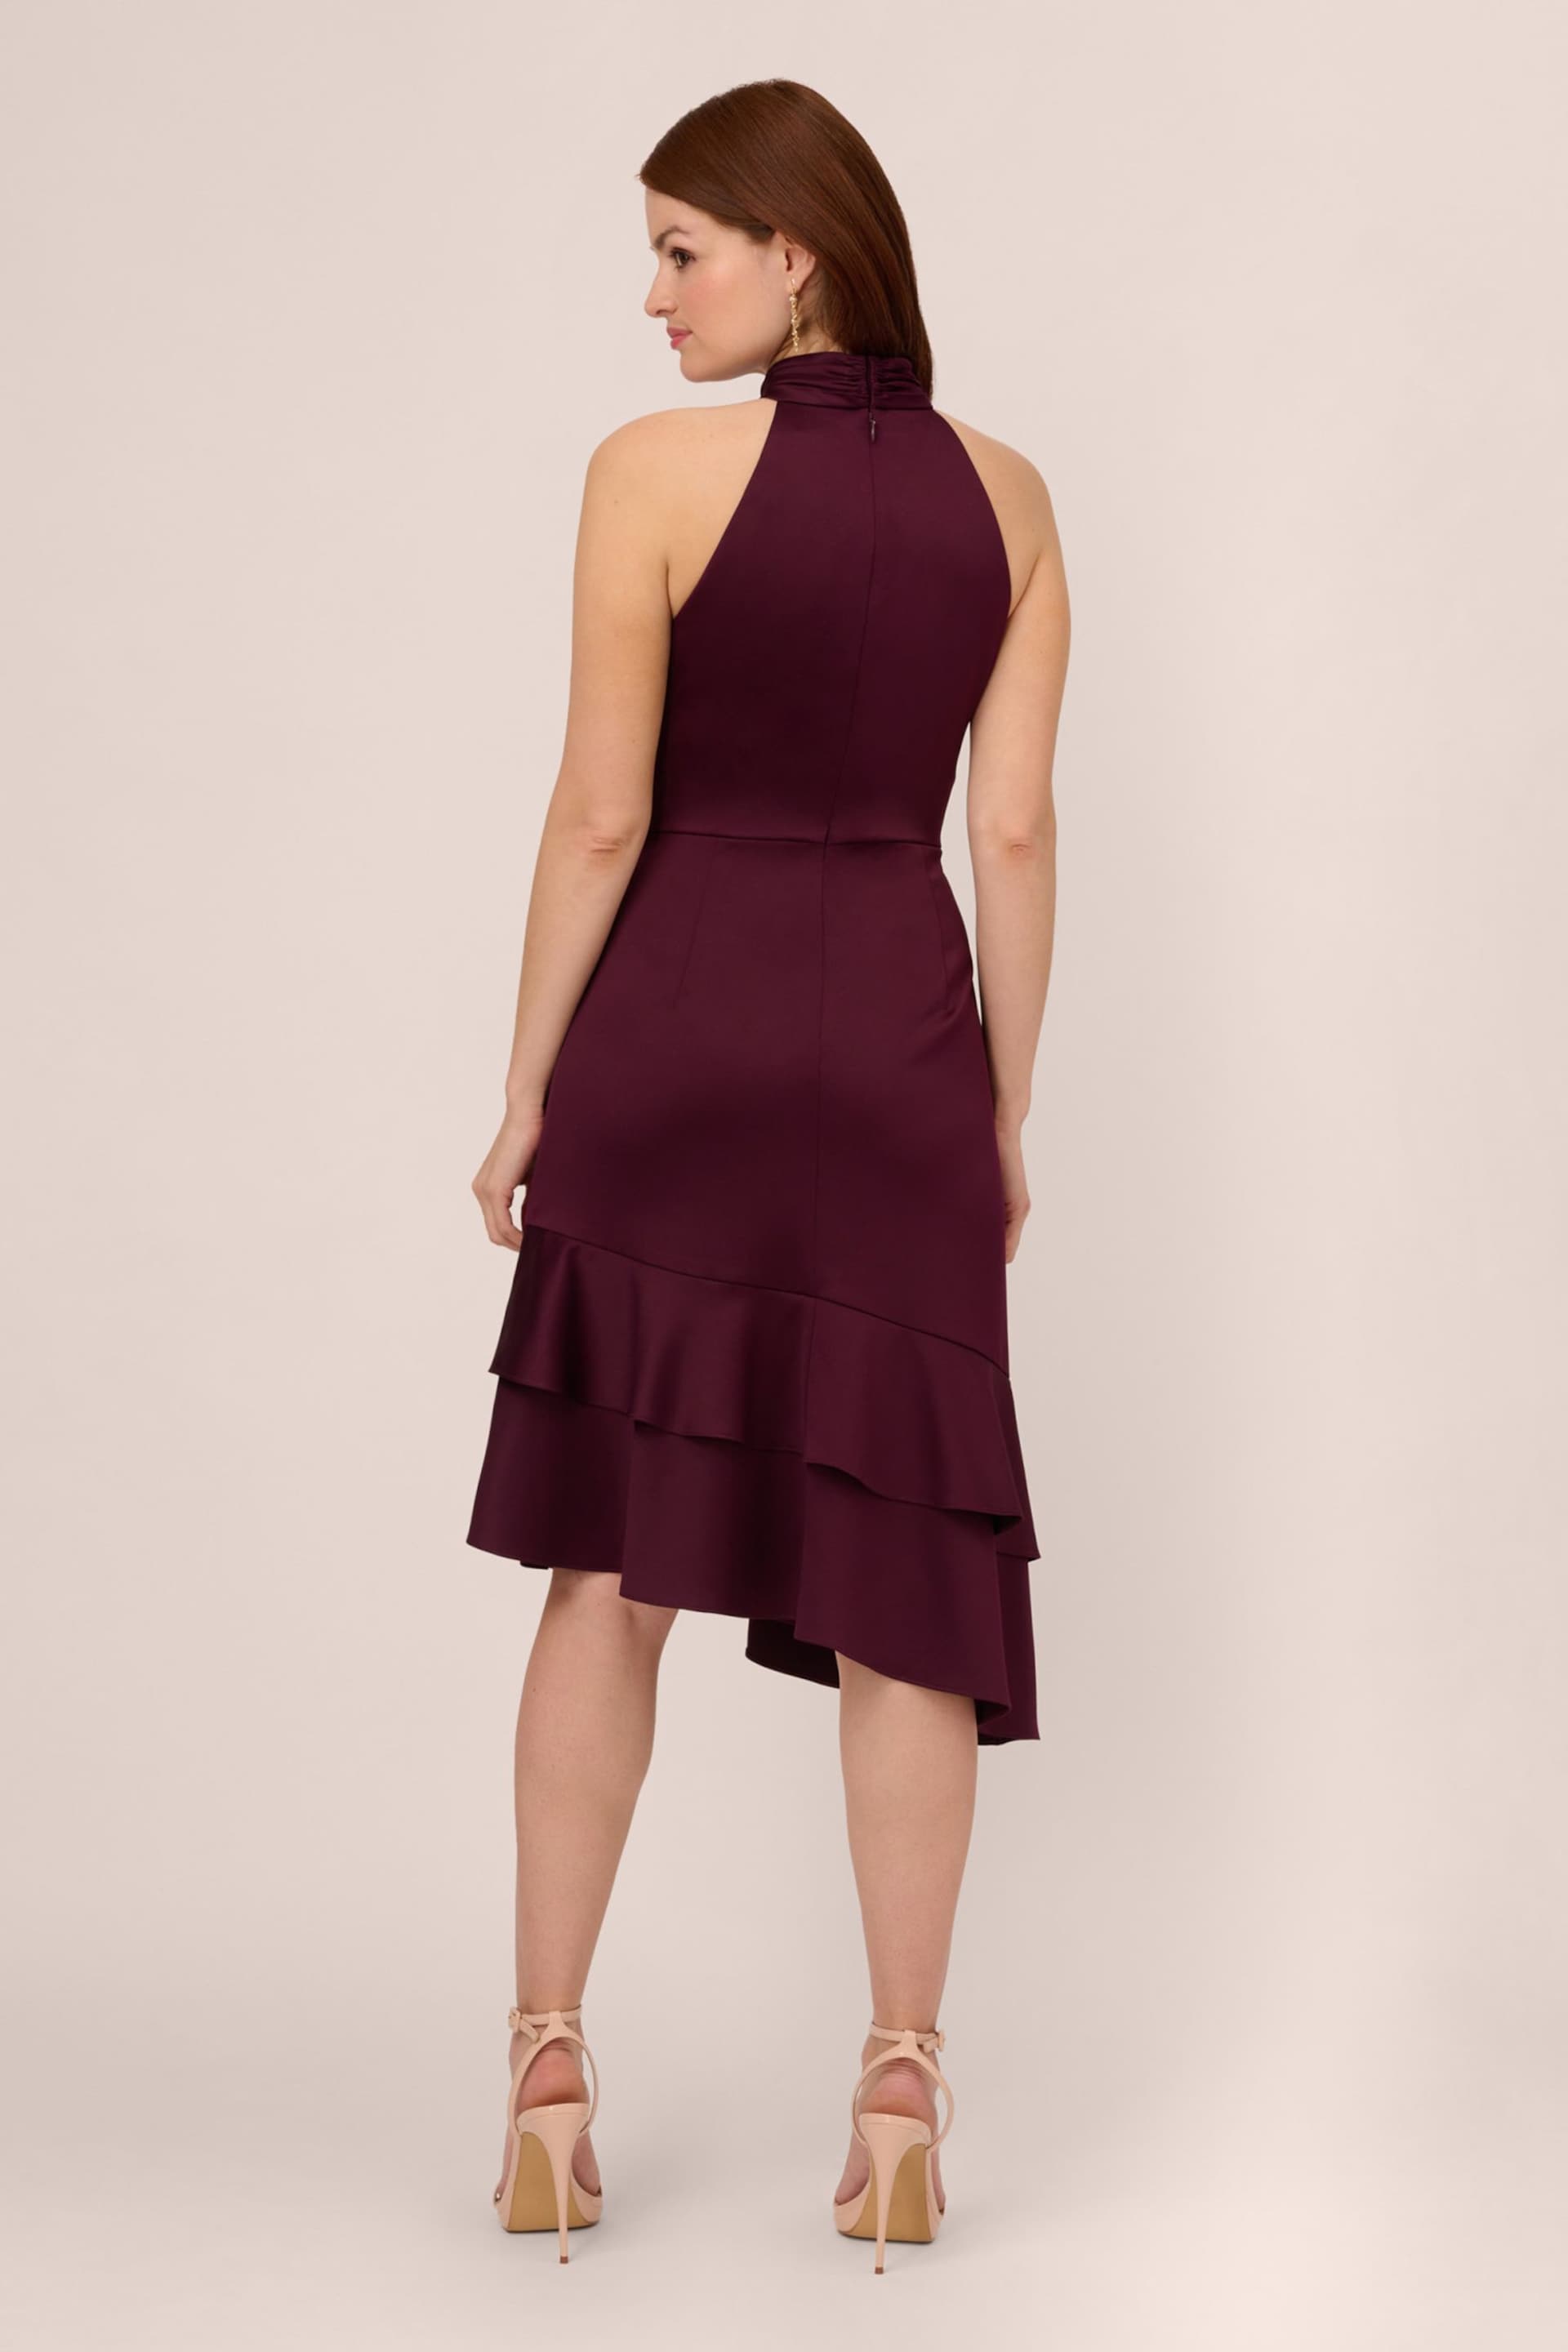 Adrianna Papell Purple Satin Crepe Dress - Image 2 of 7